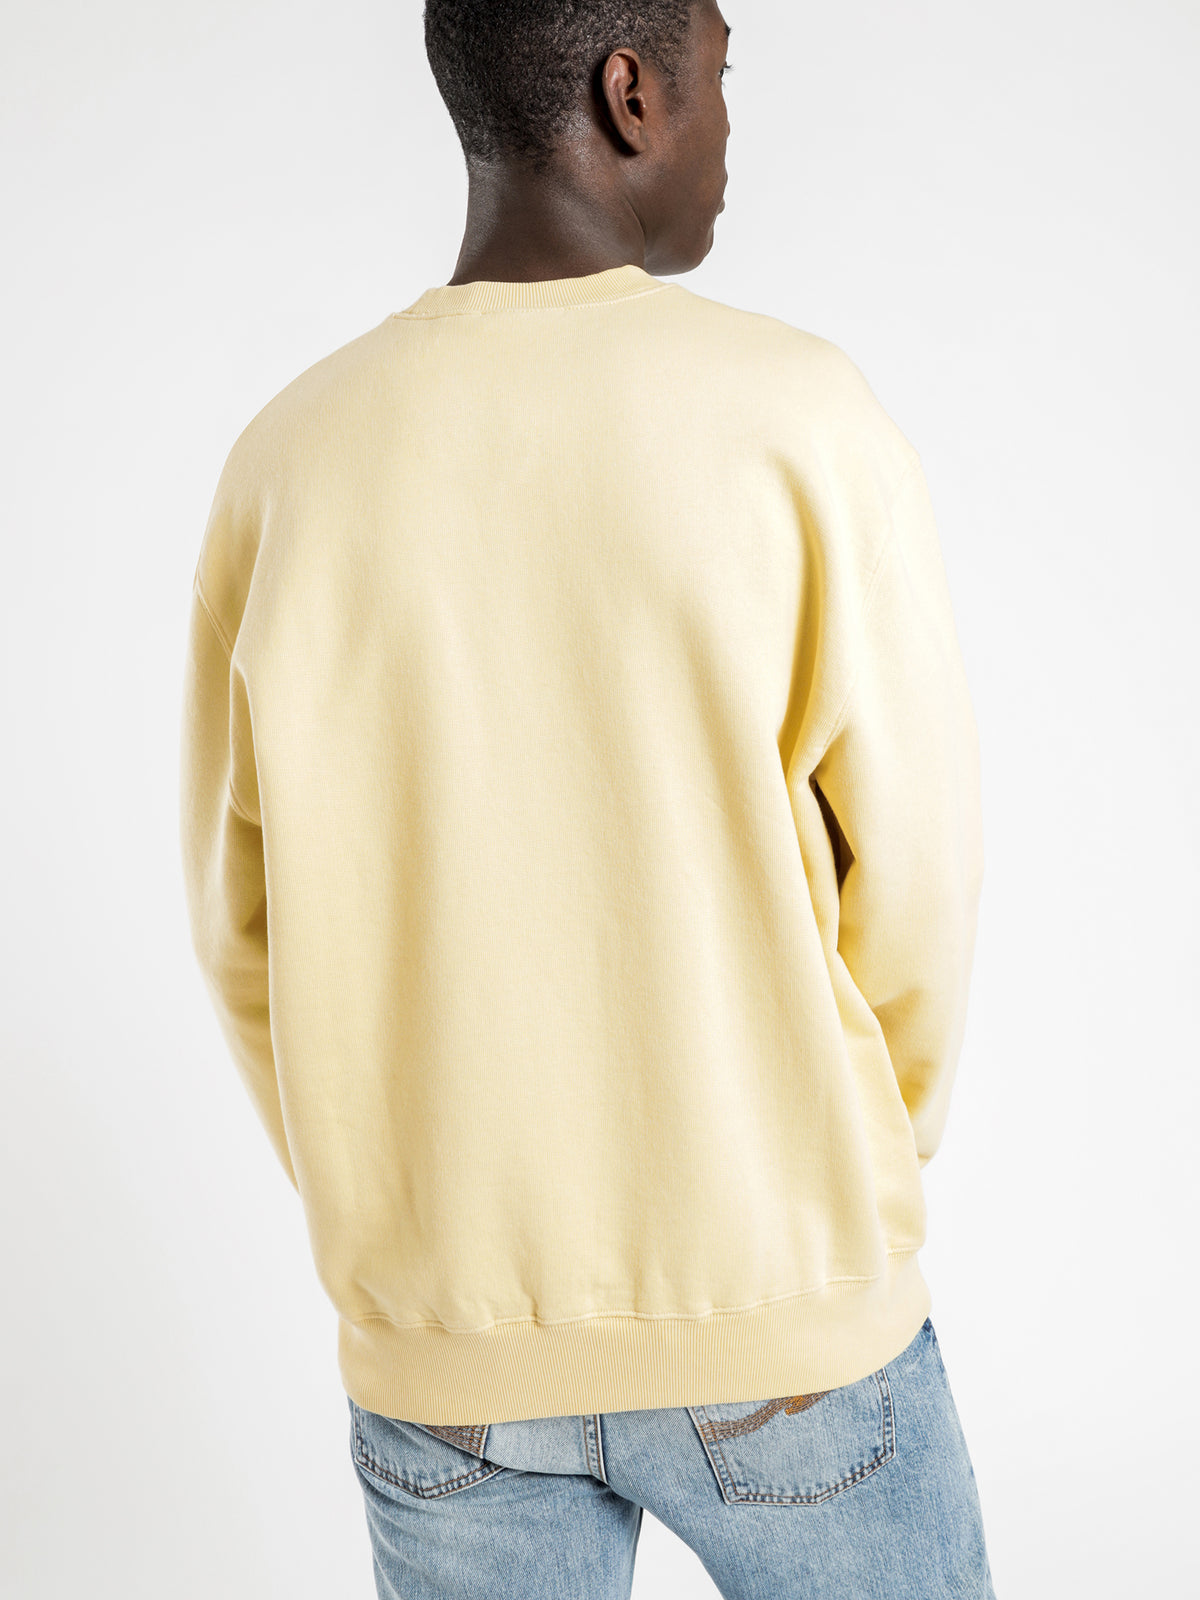 Carhartt Wip Pocket Sweatshirt in Beige | Beige